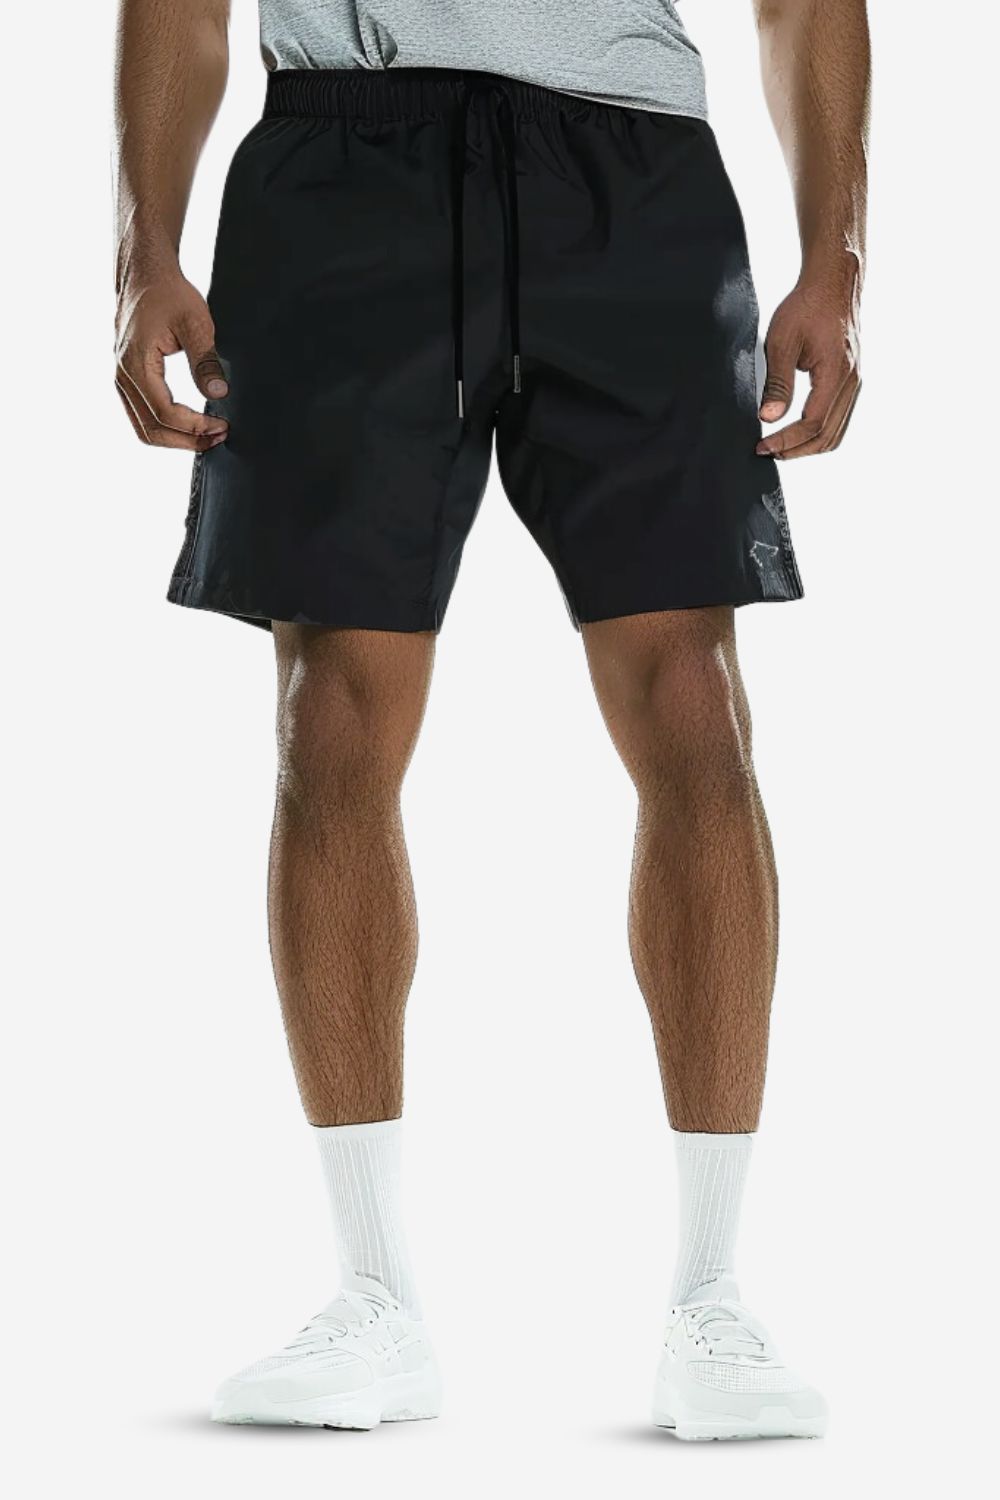 APEX activewear , men black shorts